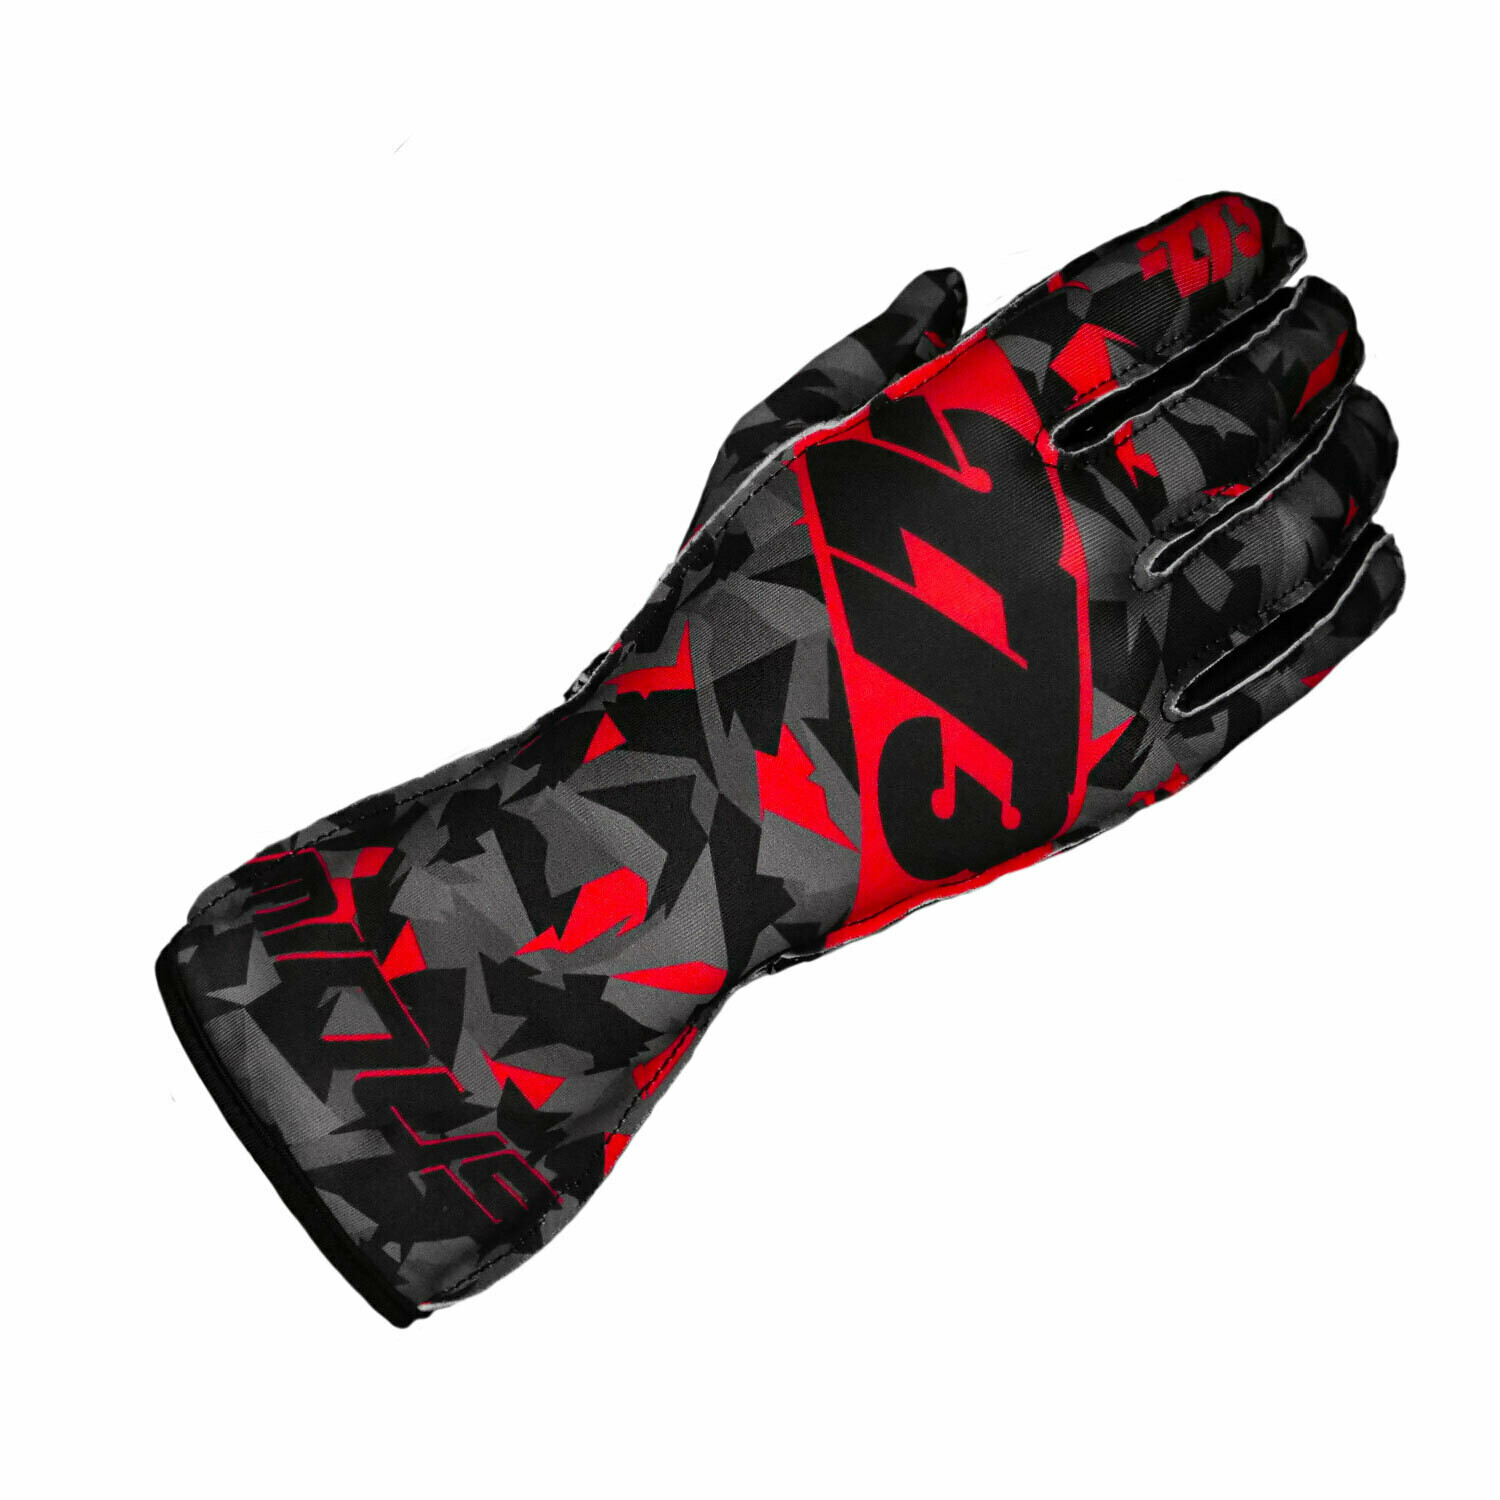 Minus 273 Red Camo gloves